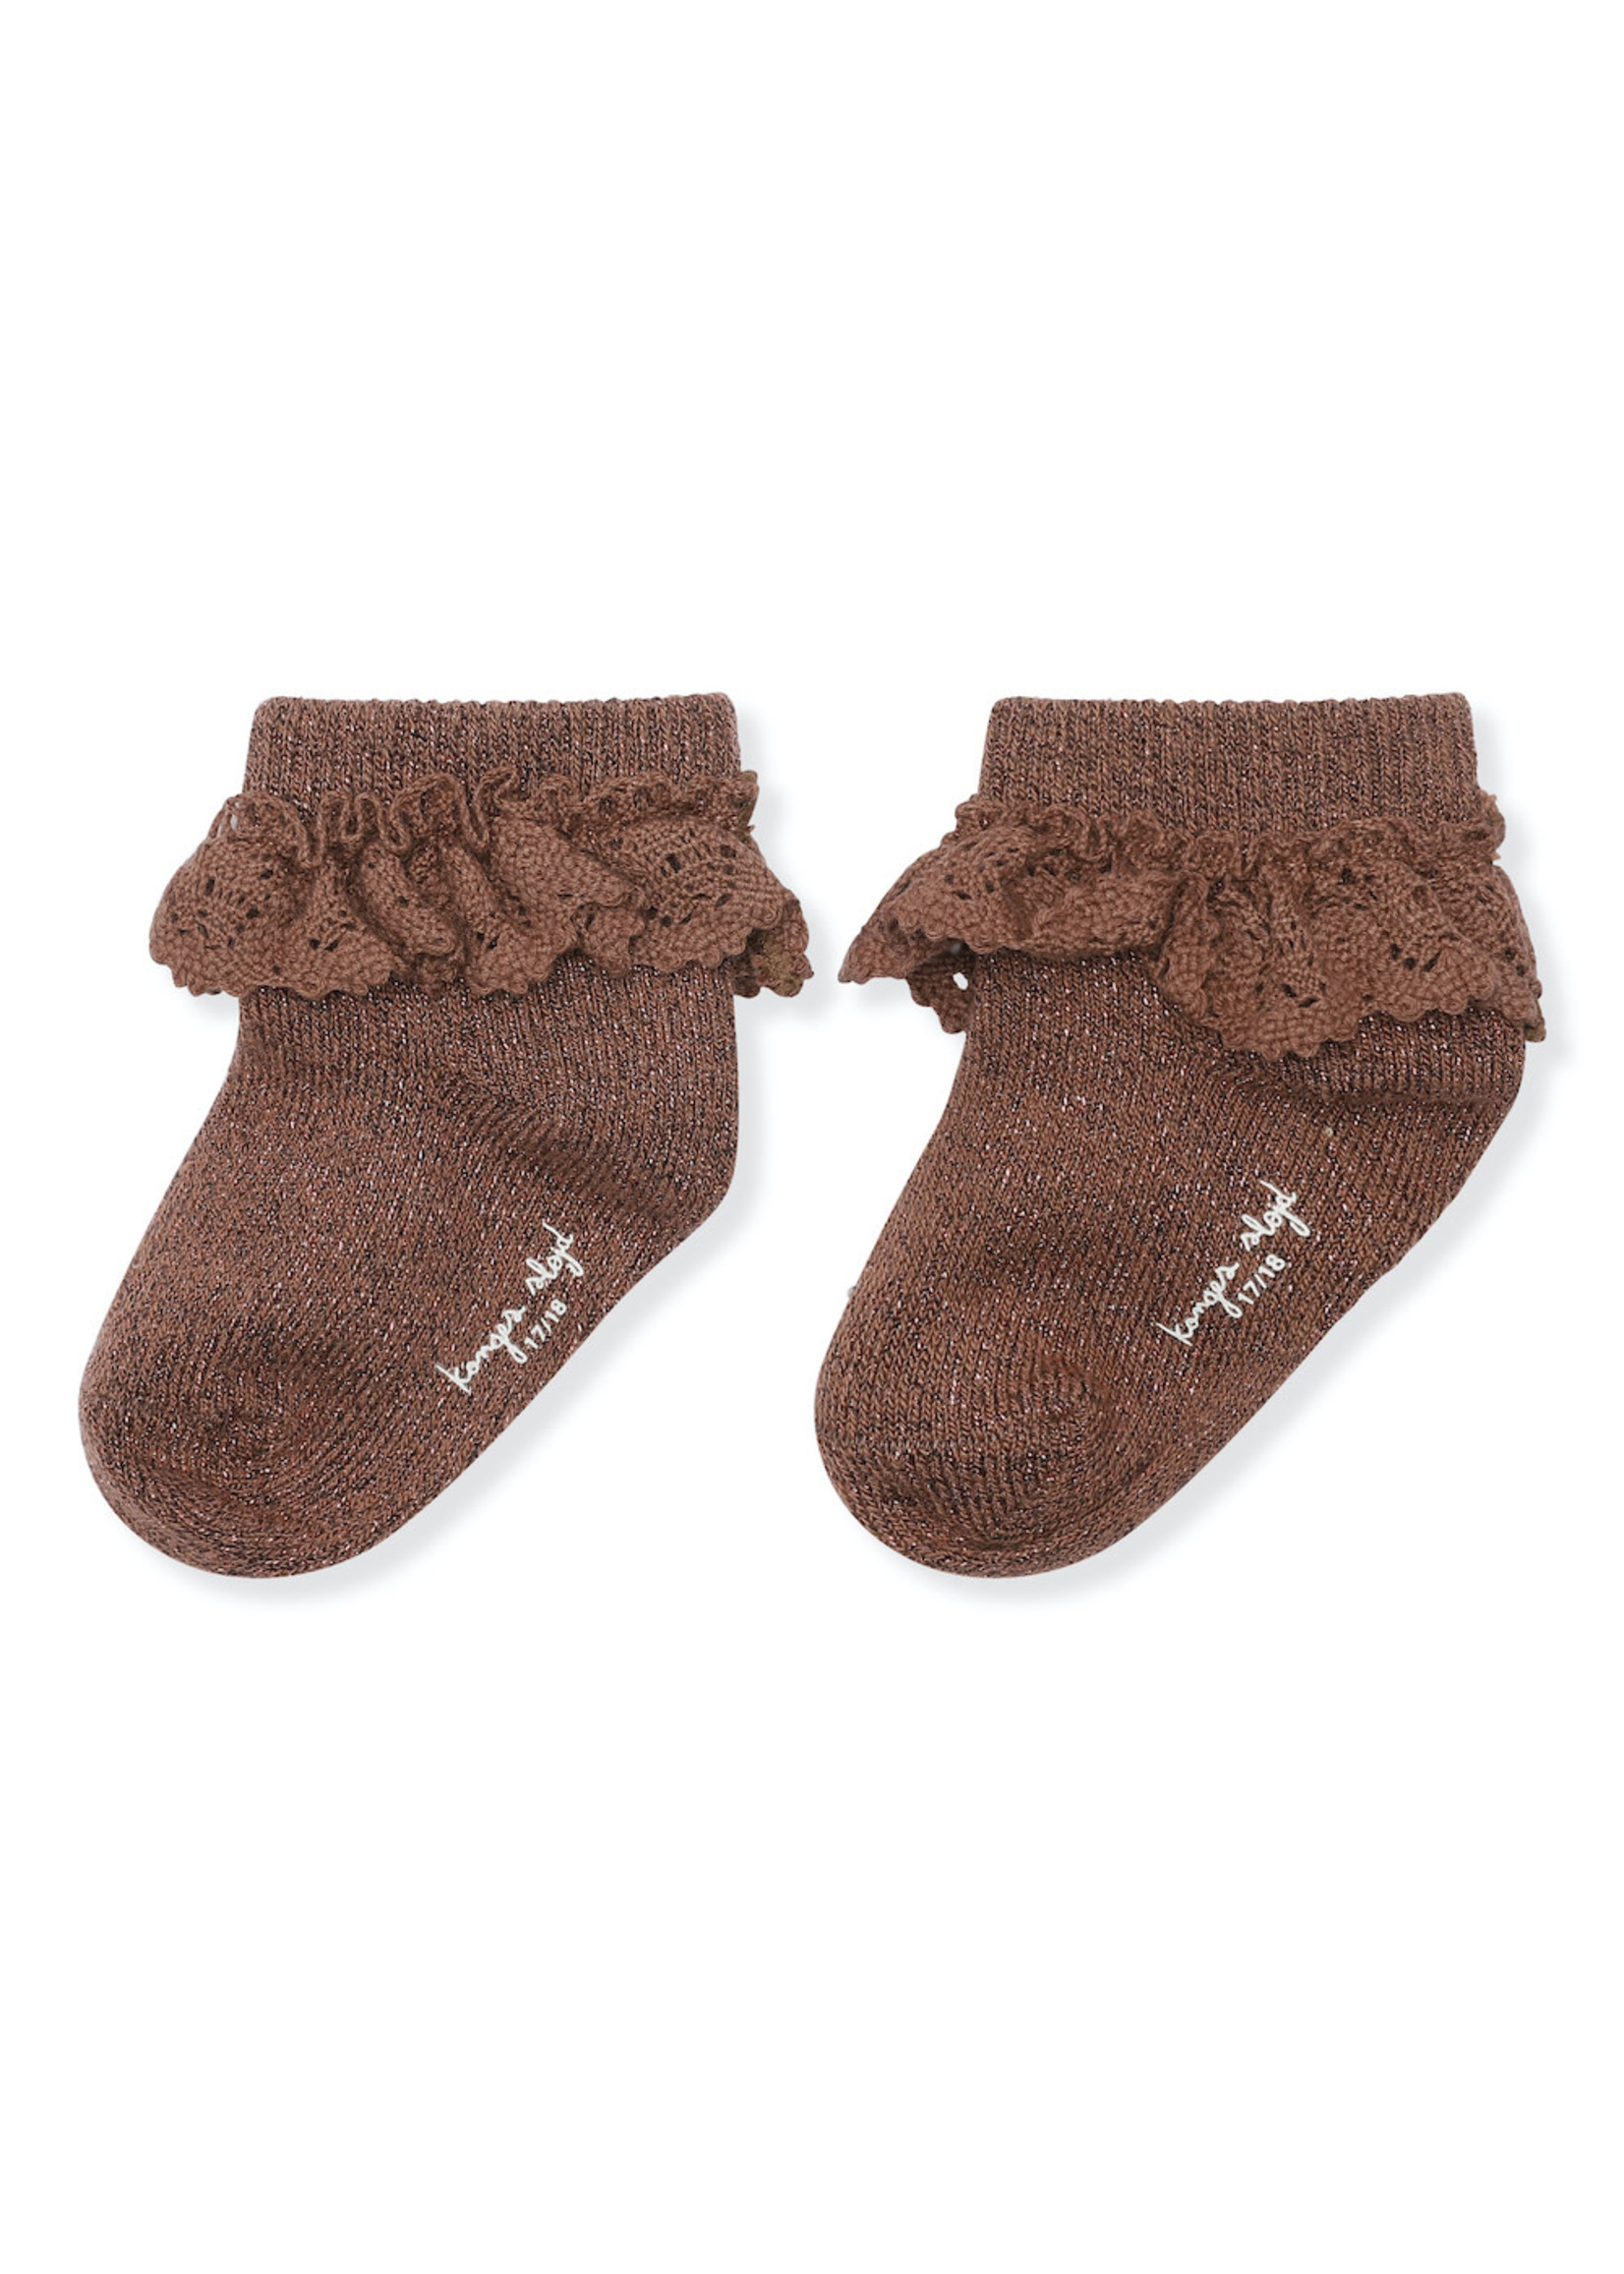 Konges Slojd Lace socks lurex - Mocca - maat 17/18